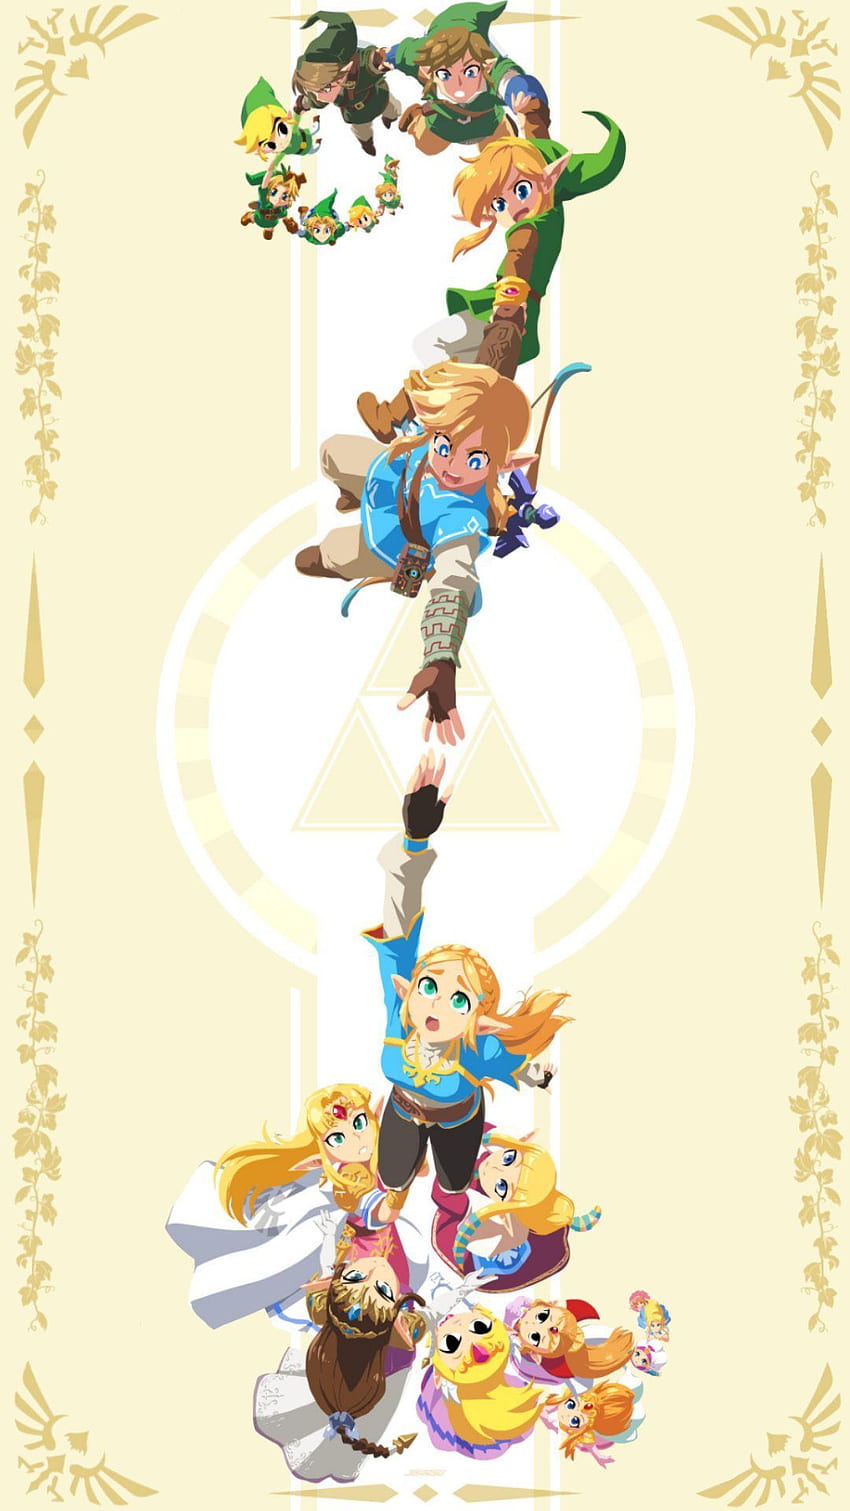 Twilight Princess Legend Of Zelda Latar Belakang Android pada tahun 2020. Legend of zelda meme, Zelda art, Legend of zelda wallpaper ponsel HD